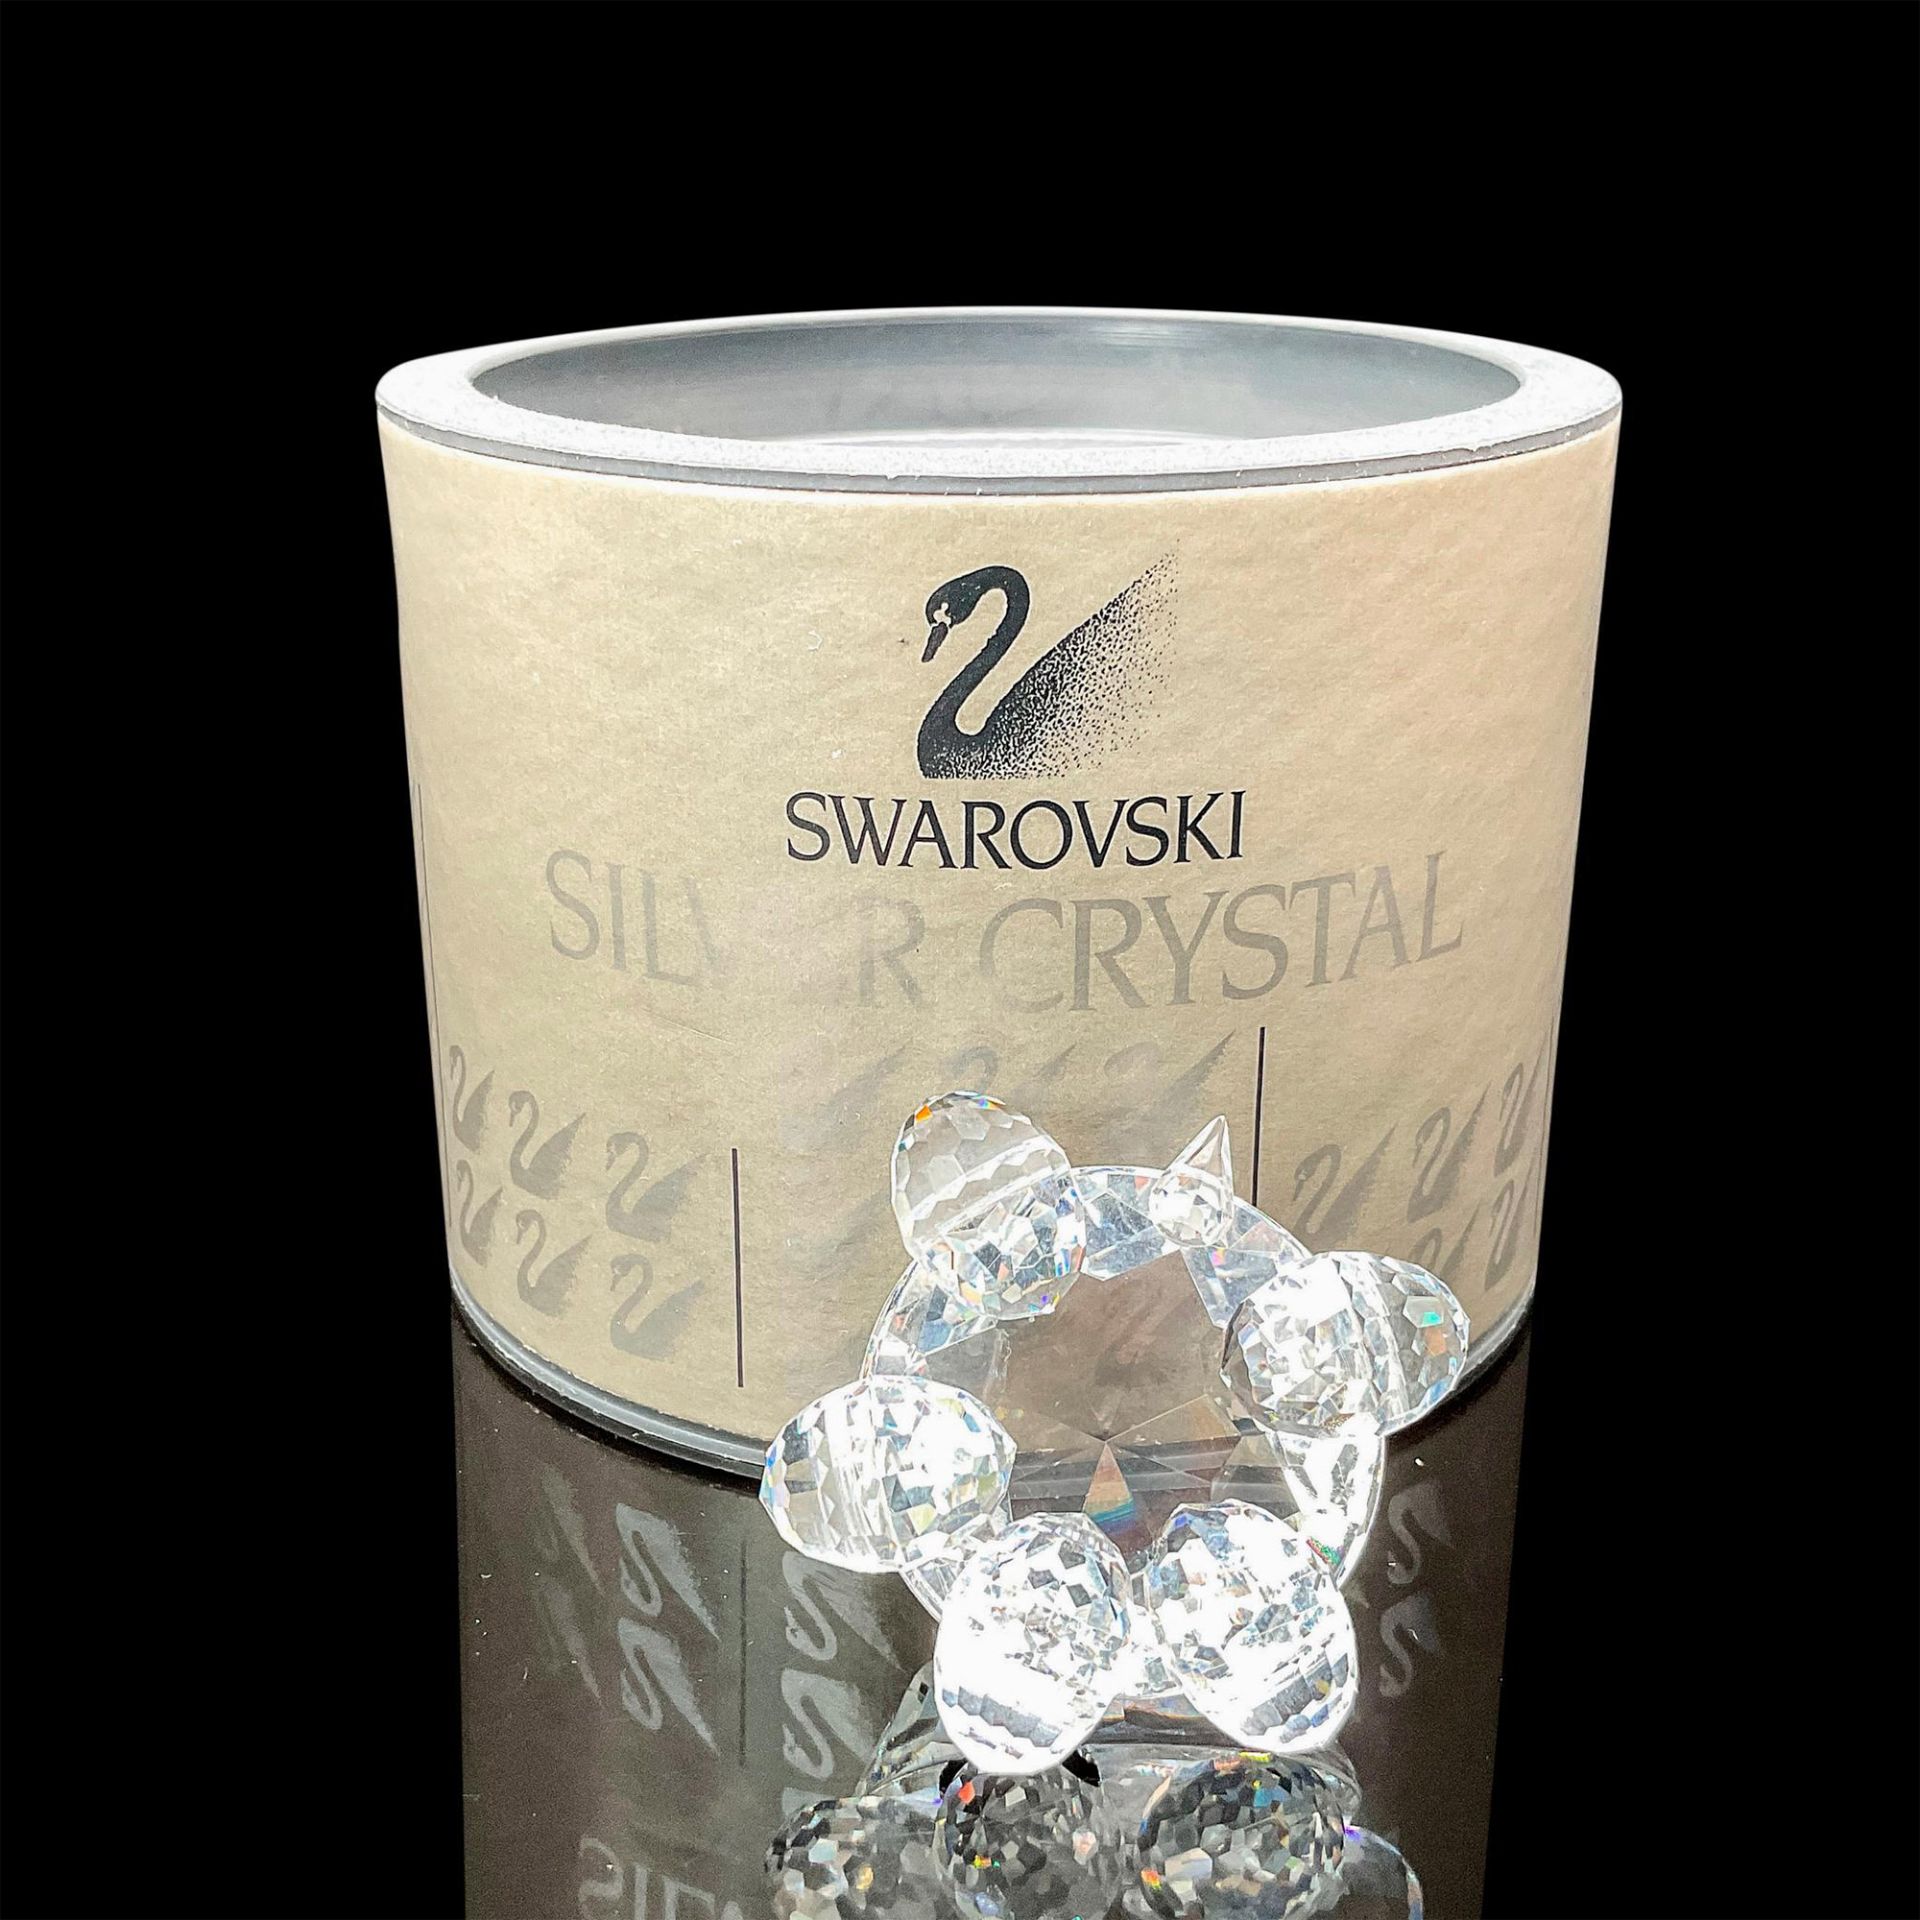 Swarovski Crystal Figurine, Tortoise Small - Image 3 of 3